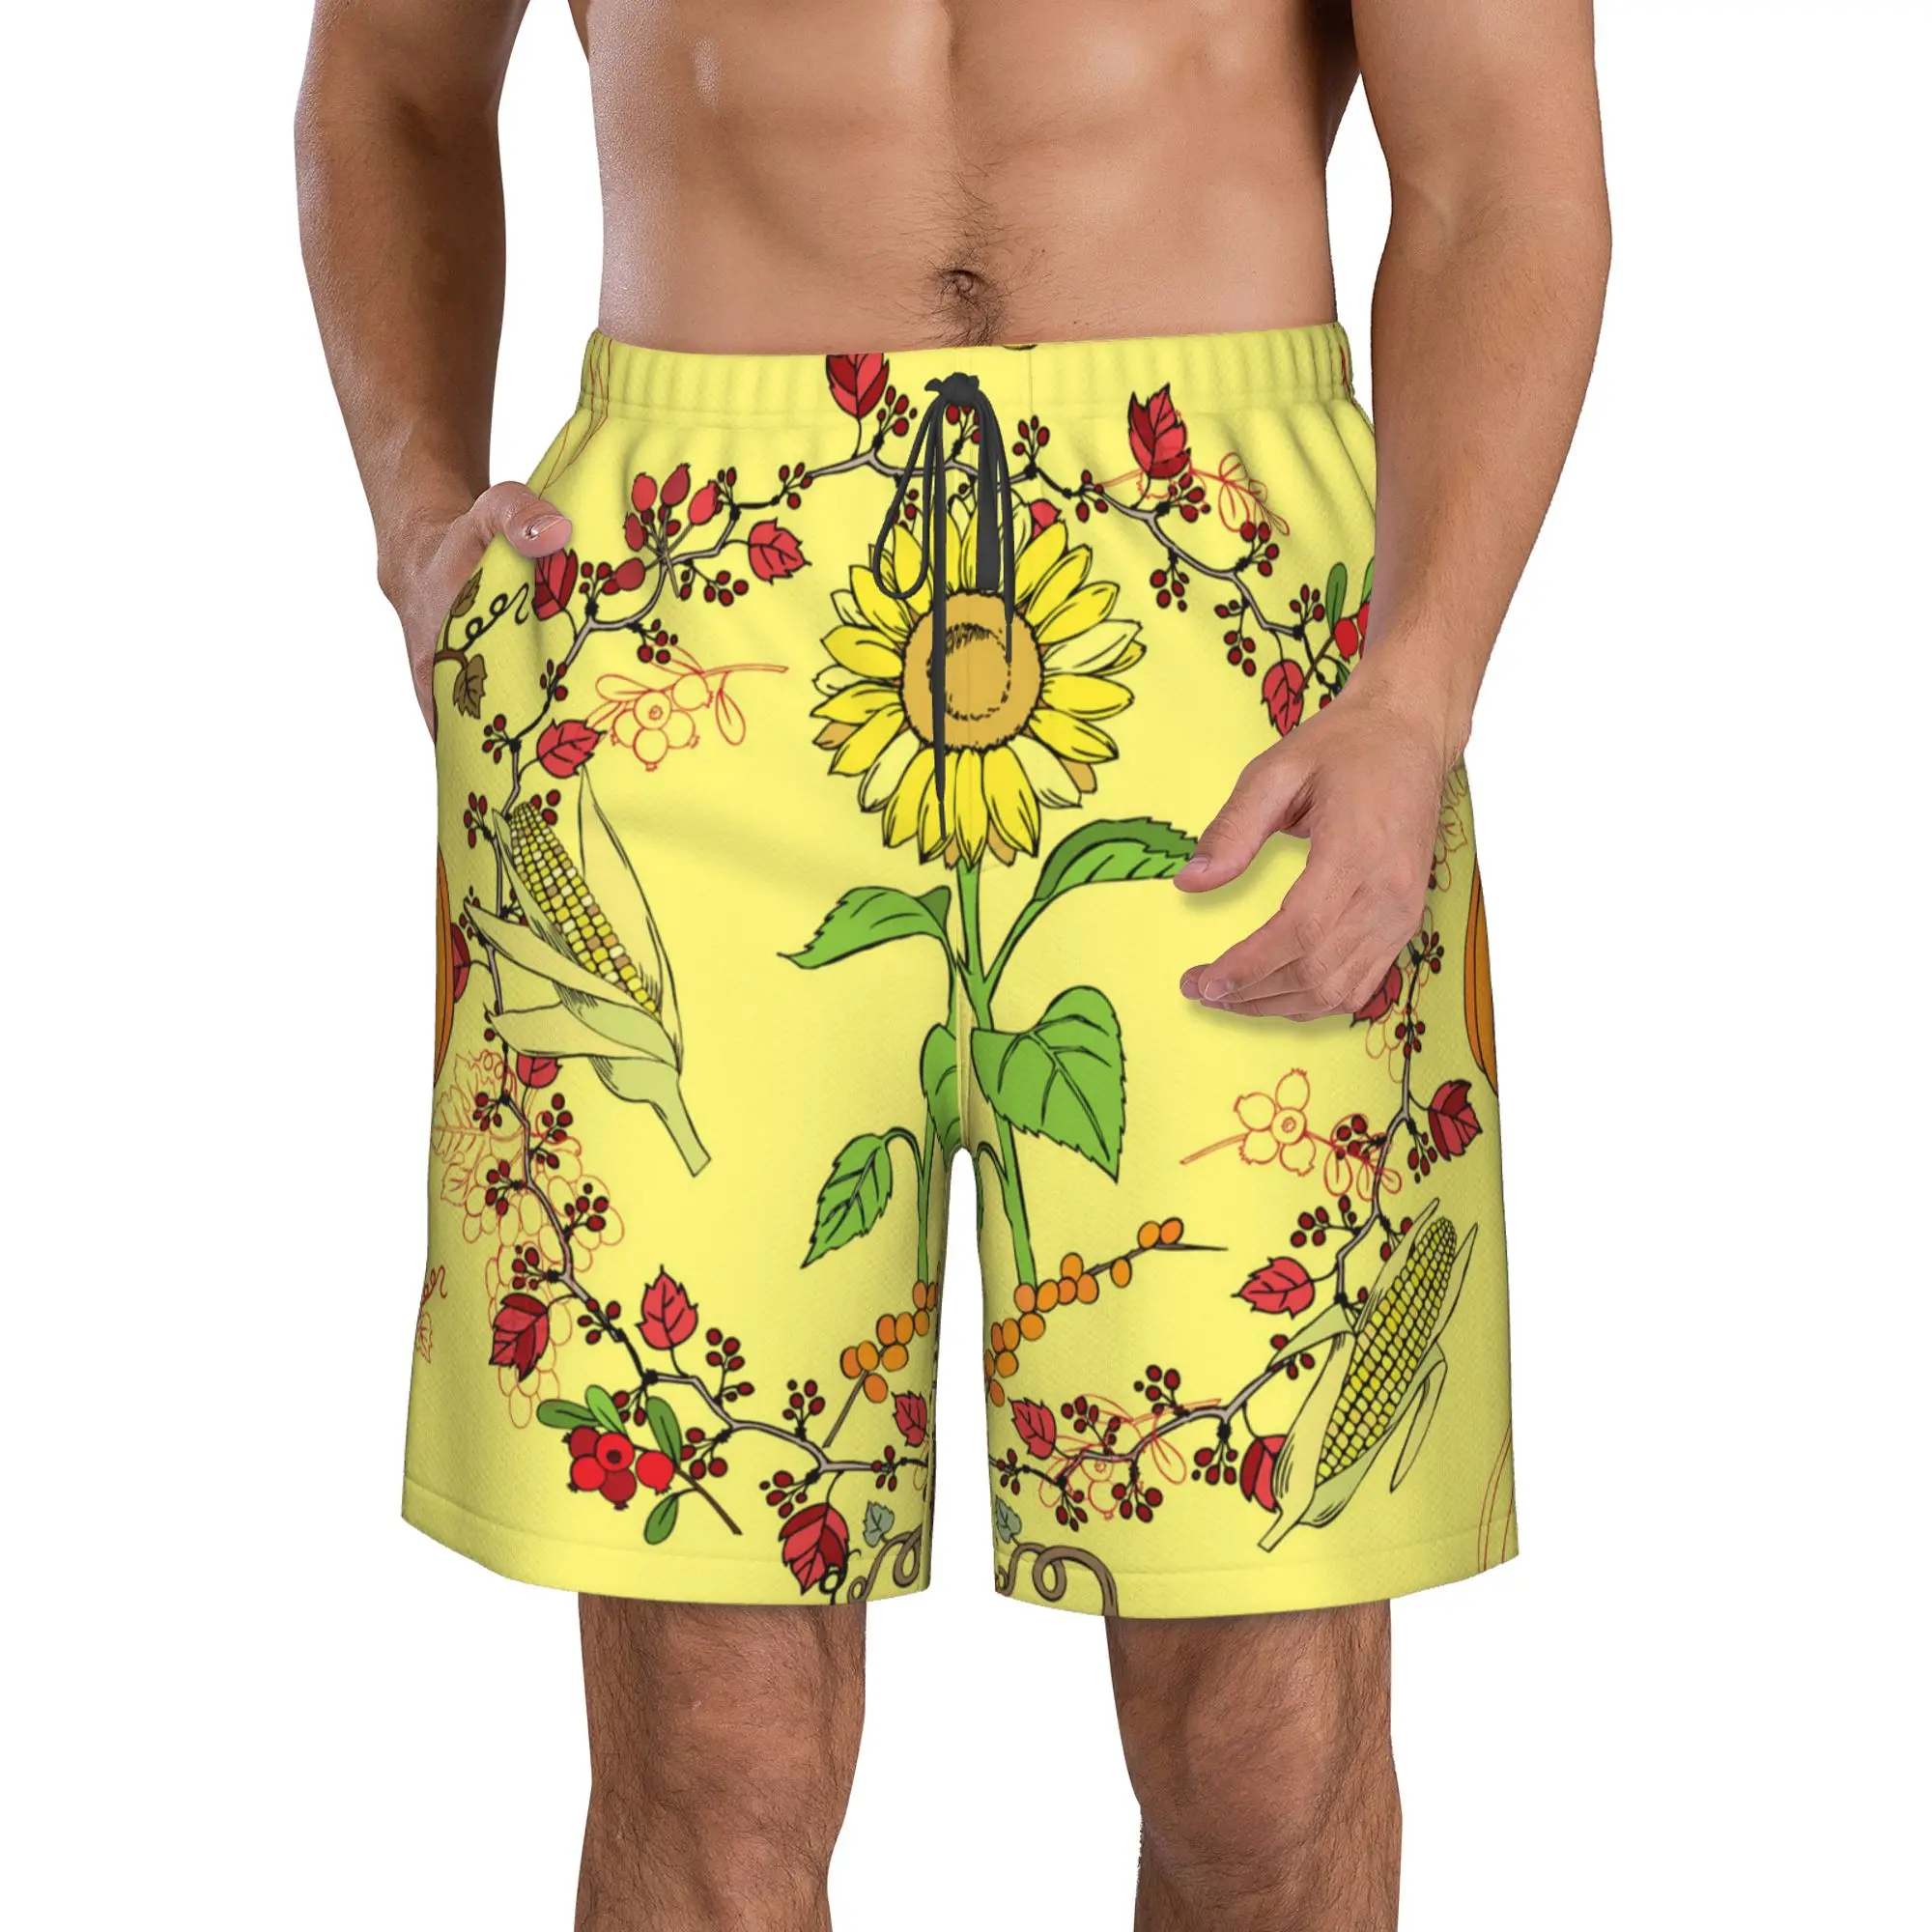 

Decoration Sunflower Swim Trunks Men Quick Dry Swim Shorts Stretch Water Beach Shorts with Compression Liner Zipper Pocket